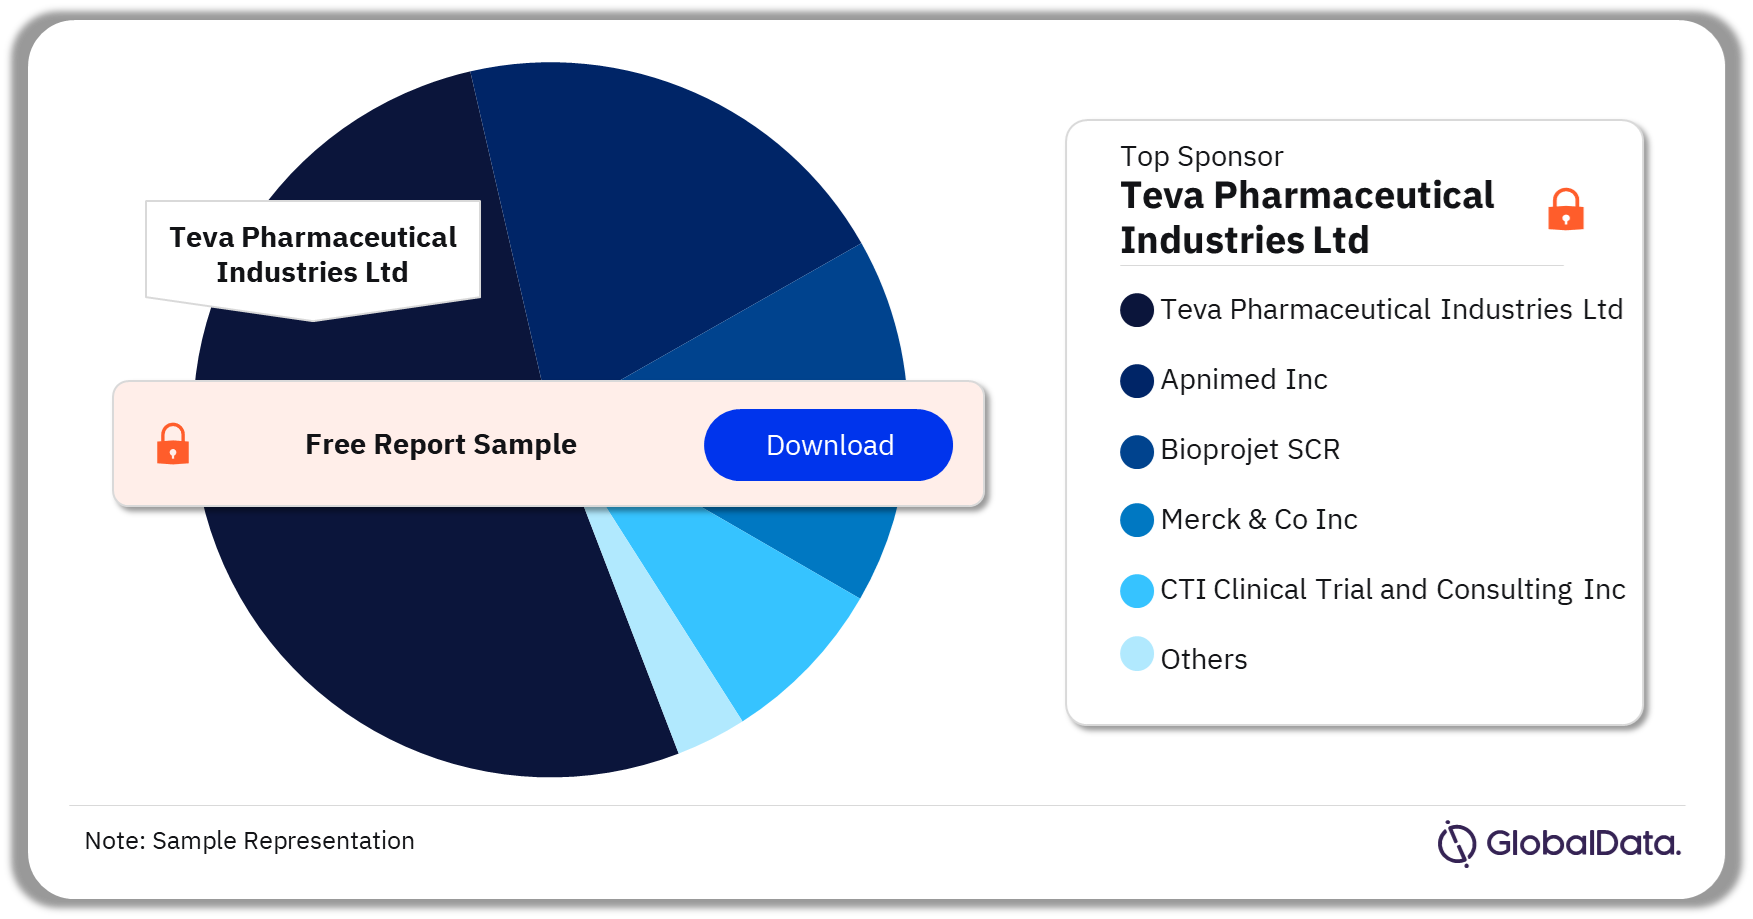 Sleep Apnea Clinical Trials Analysis by Leading Companies, 2023 (%)